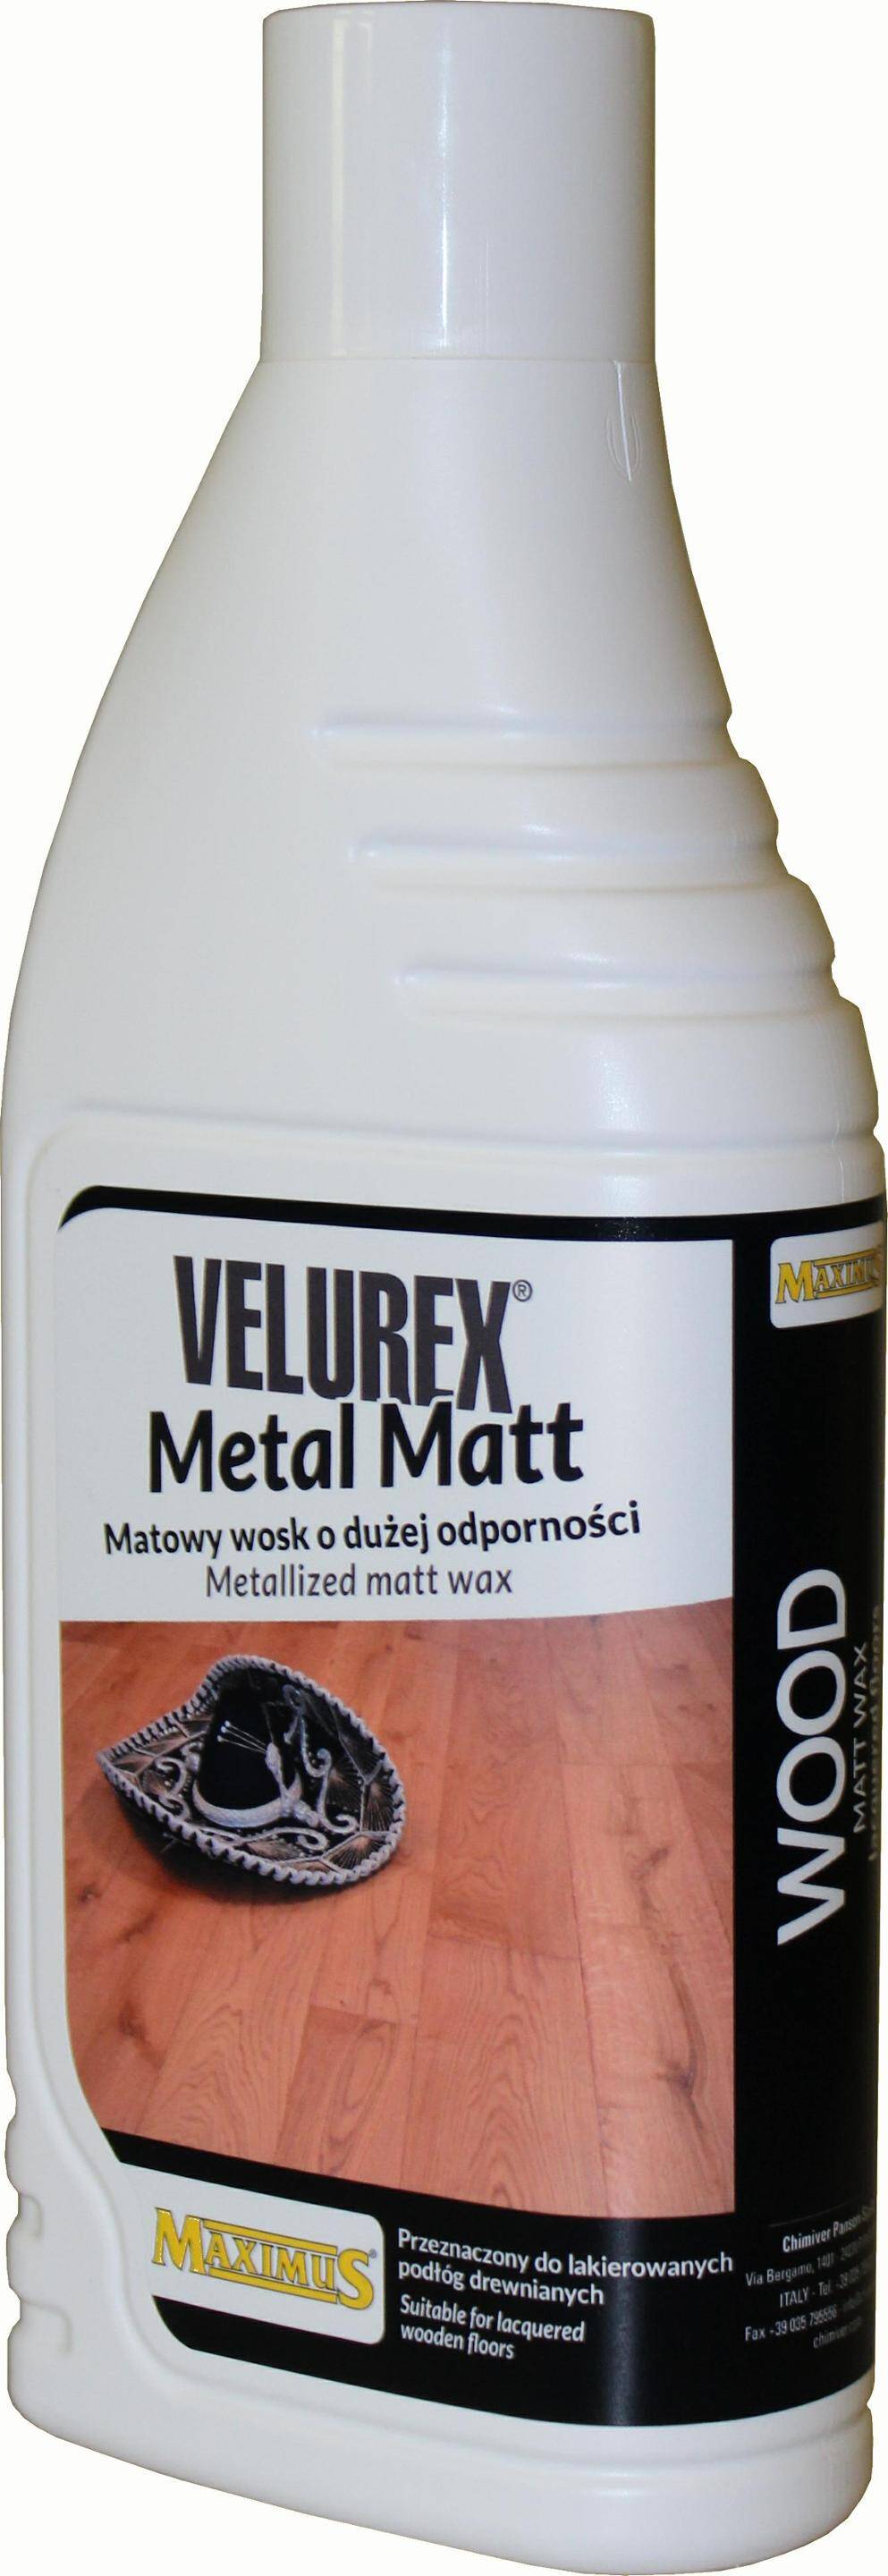 Maximus Velurex Metal Matt (1L )